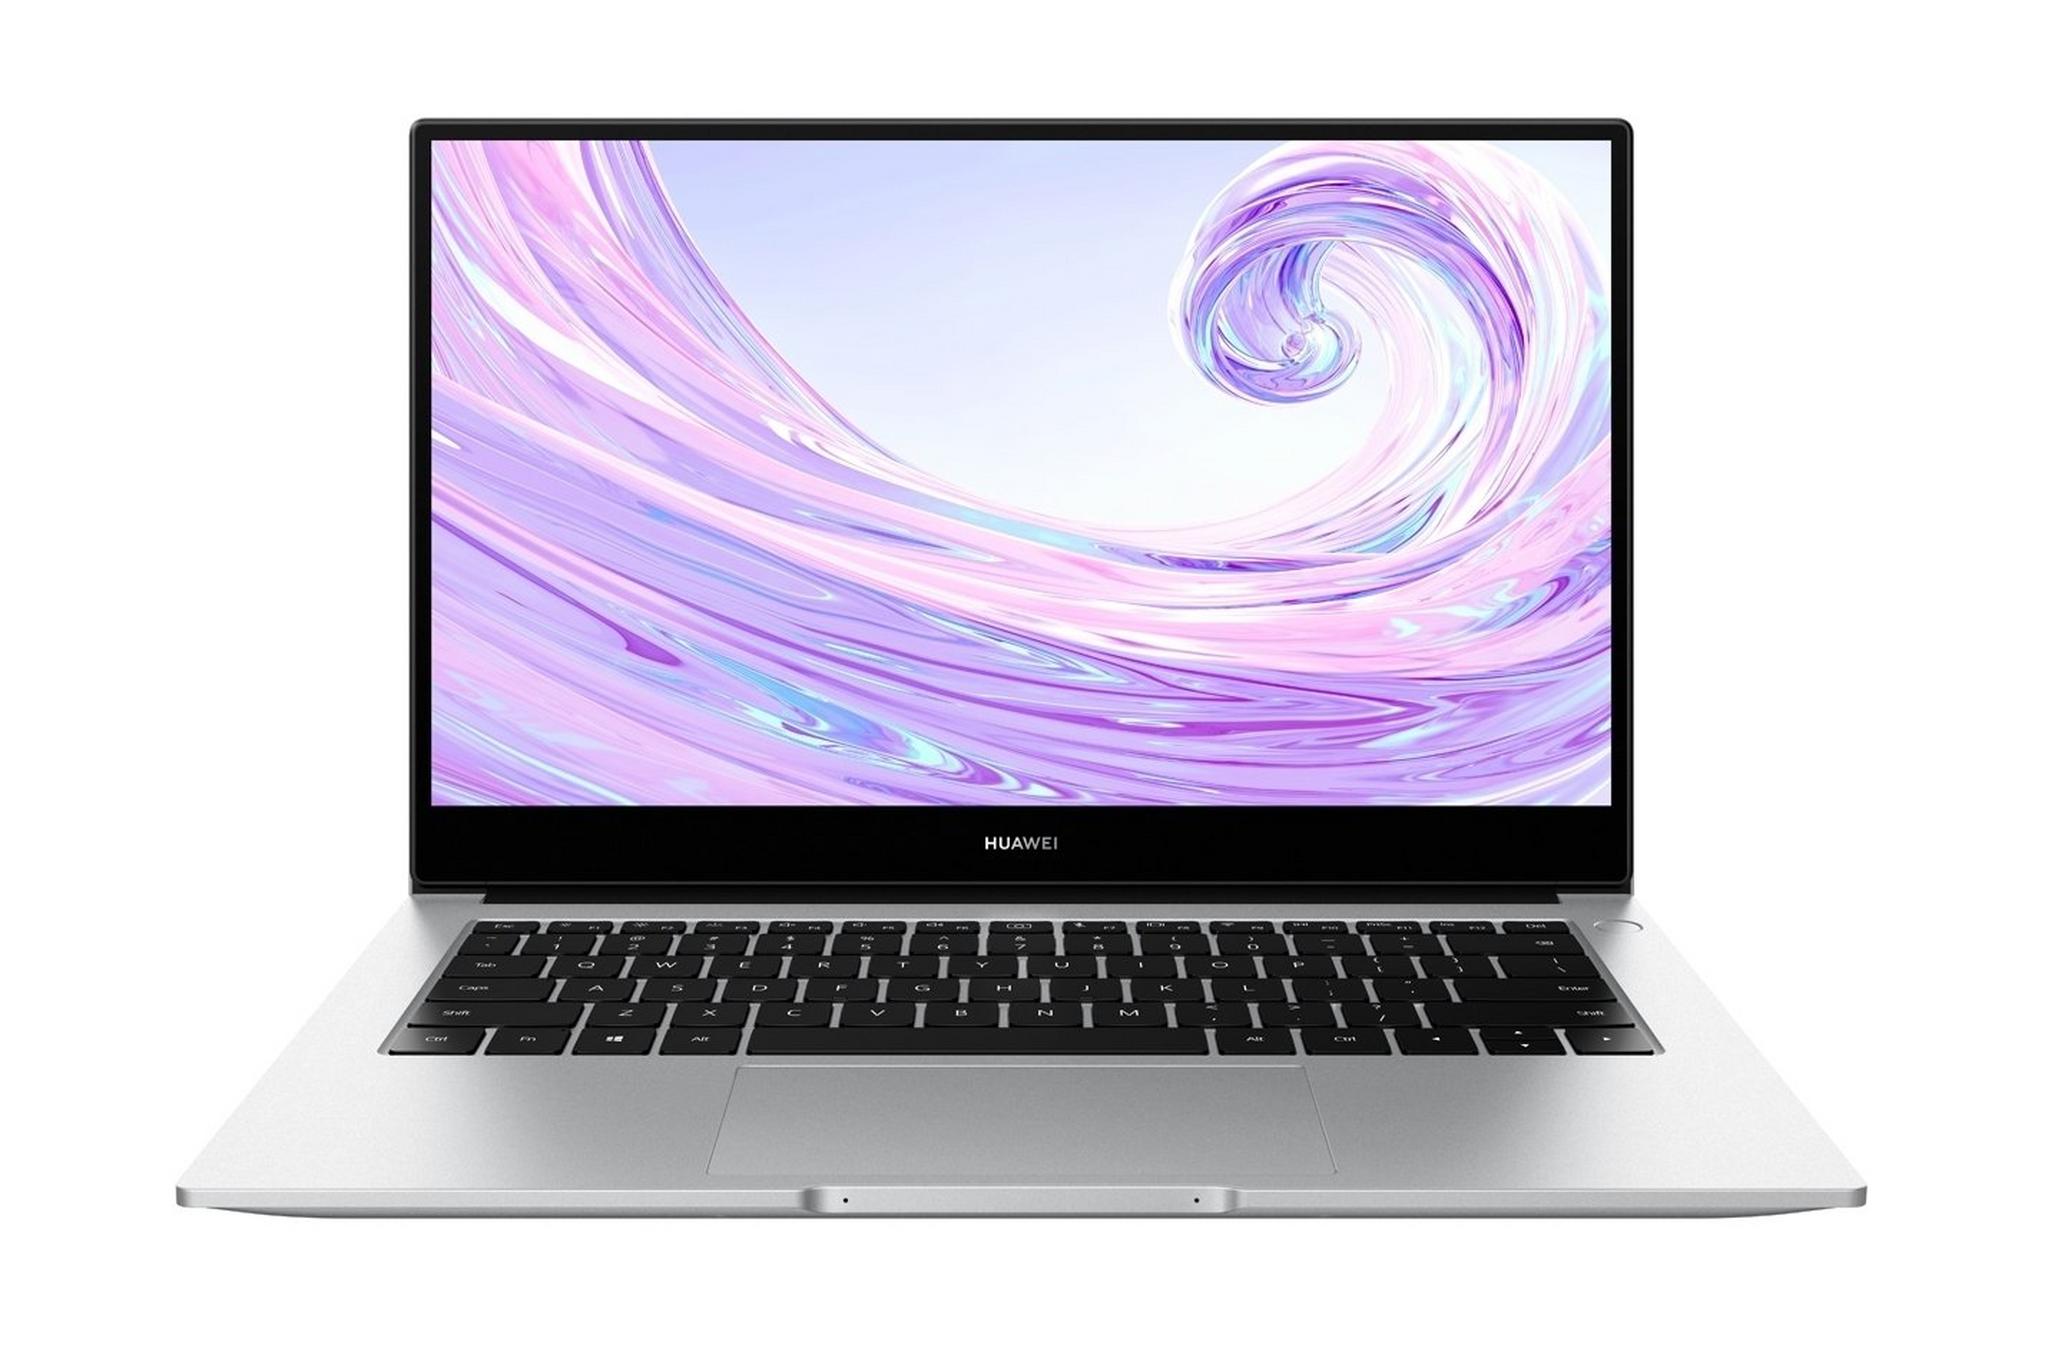 Huawei MateBook D 14 Intel Core i5 10th Gen. 8GB RAM 512GB SSD 14-inch Laptop - Grey